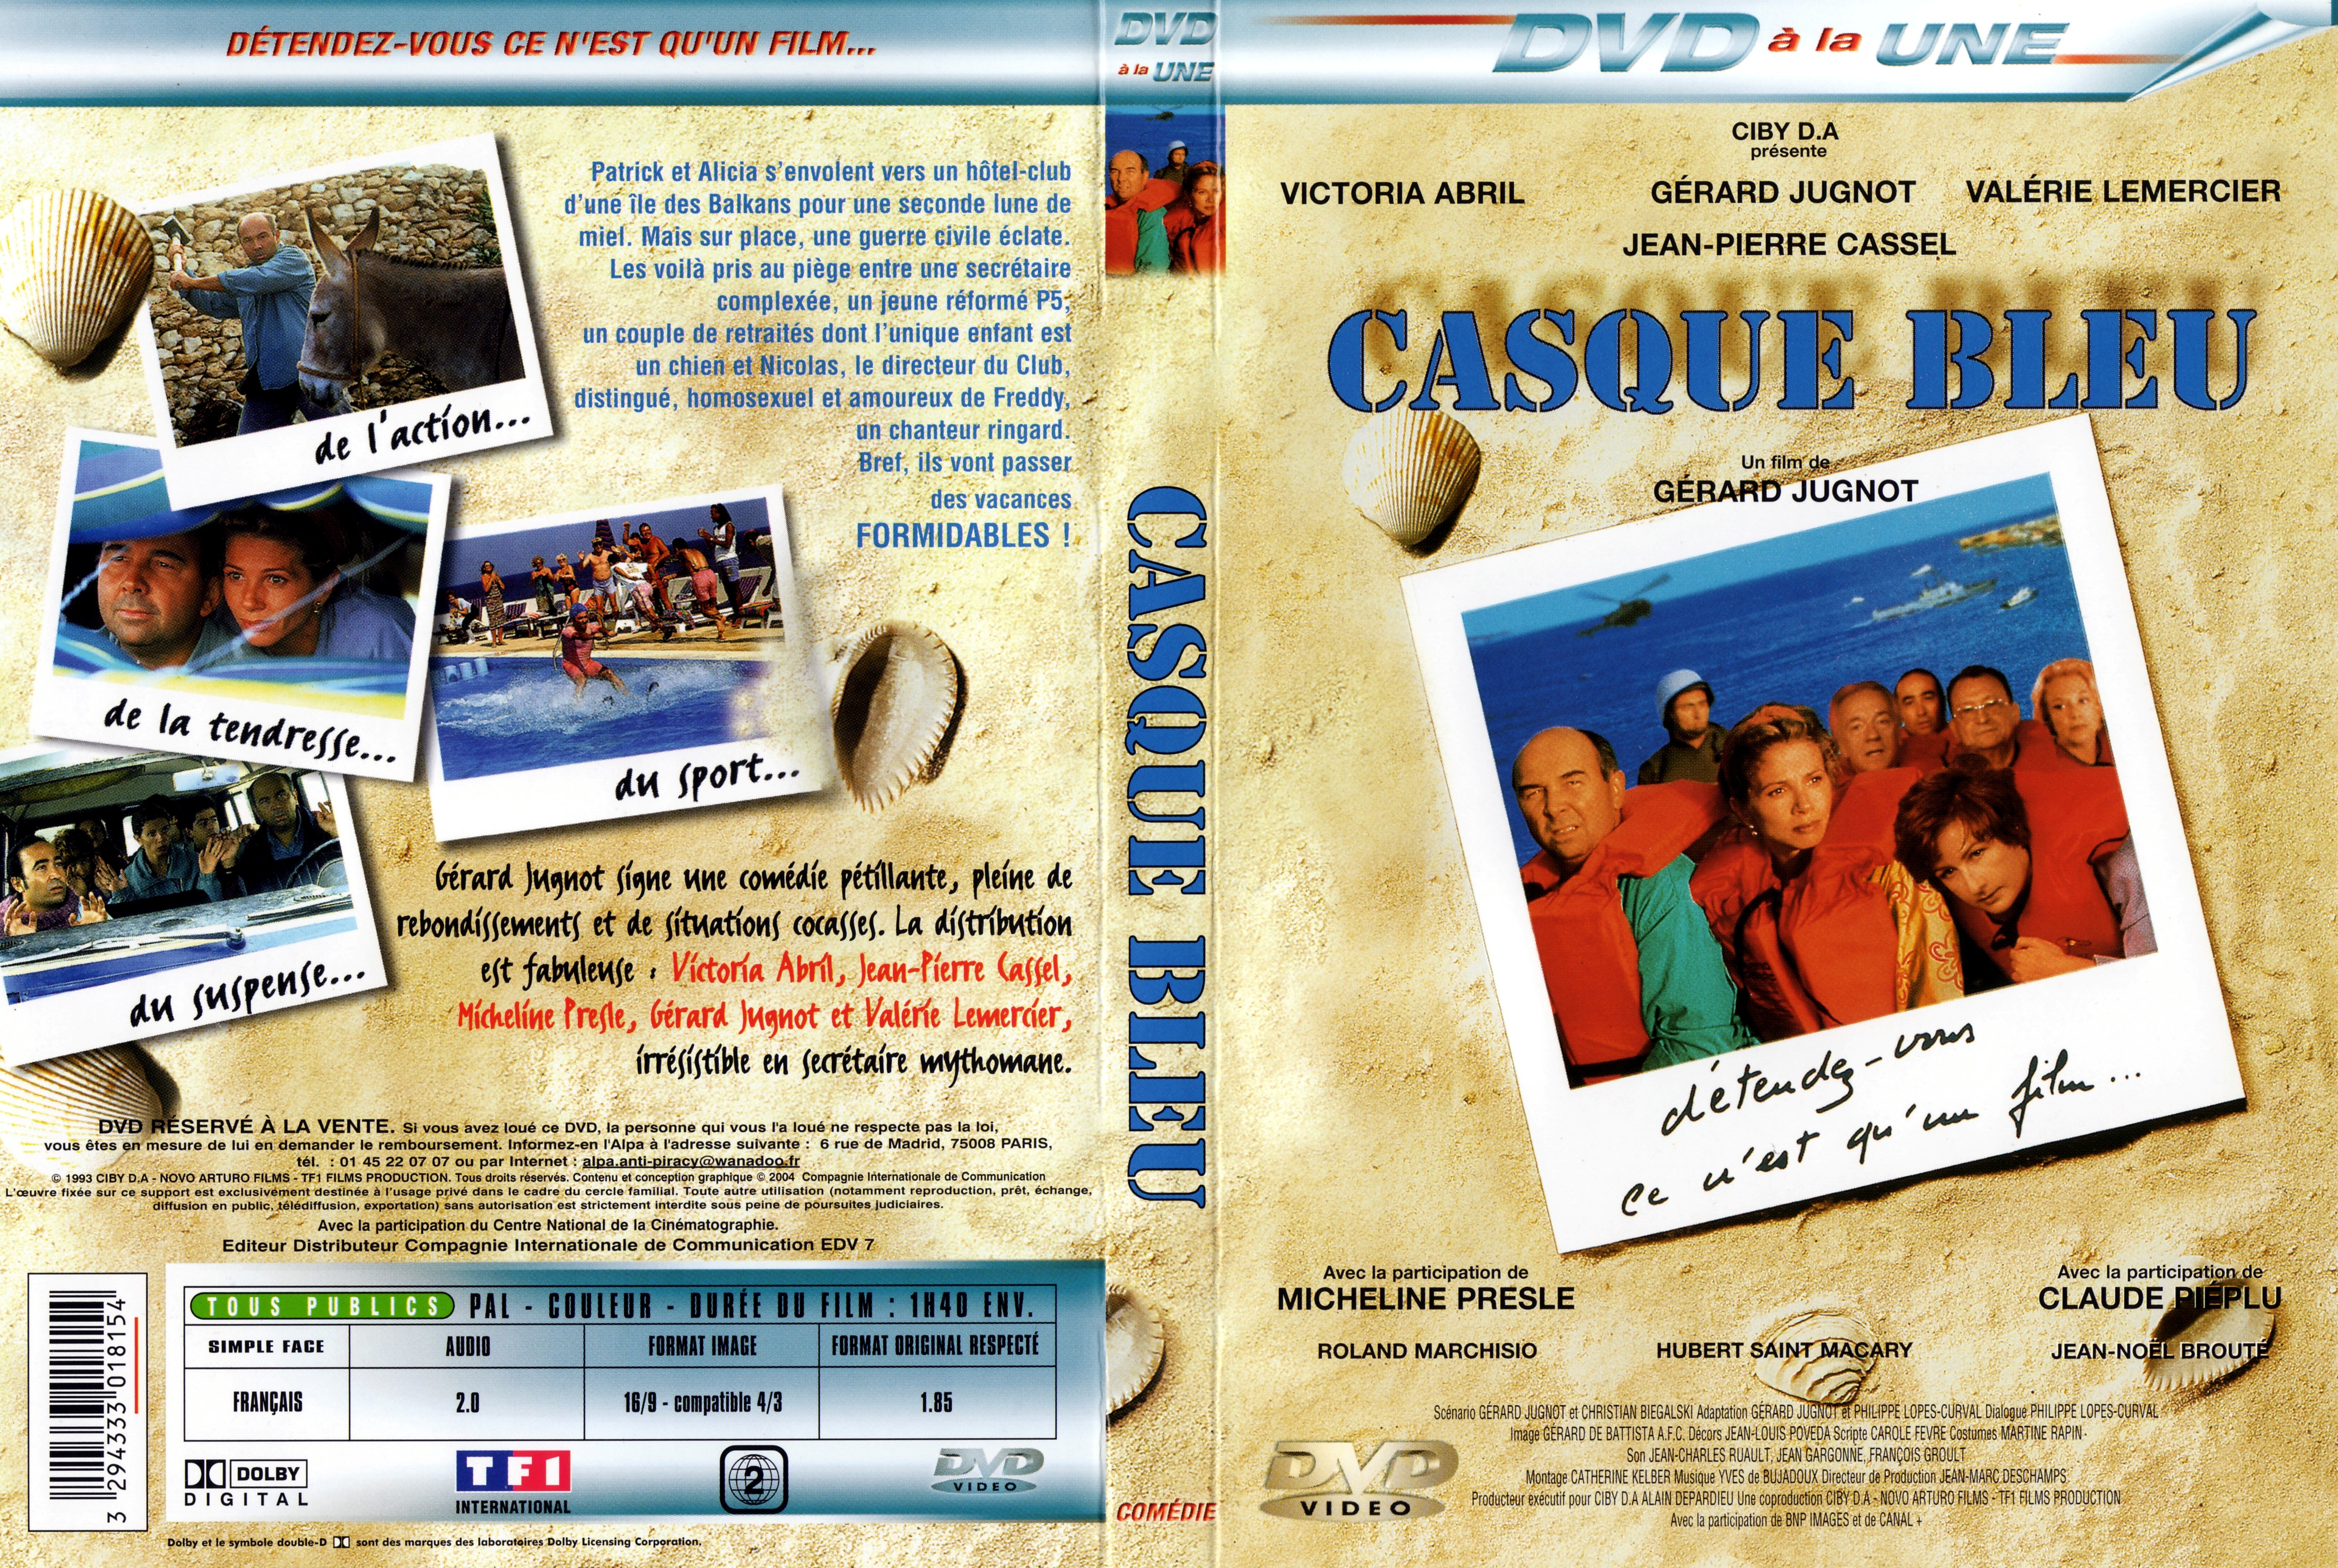 Jaquette DVD Casque bleu v2